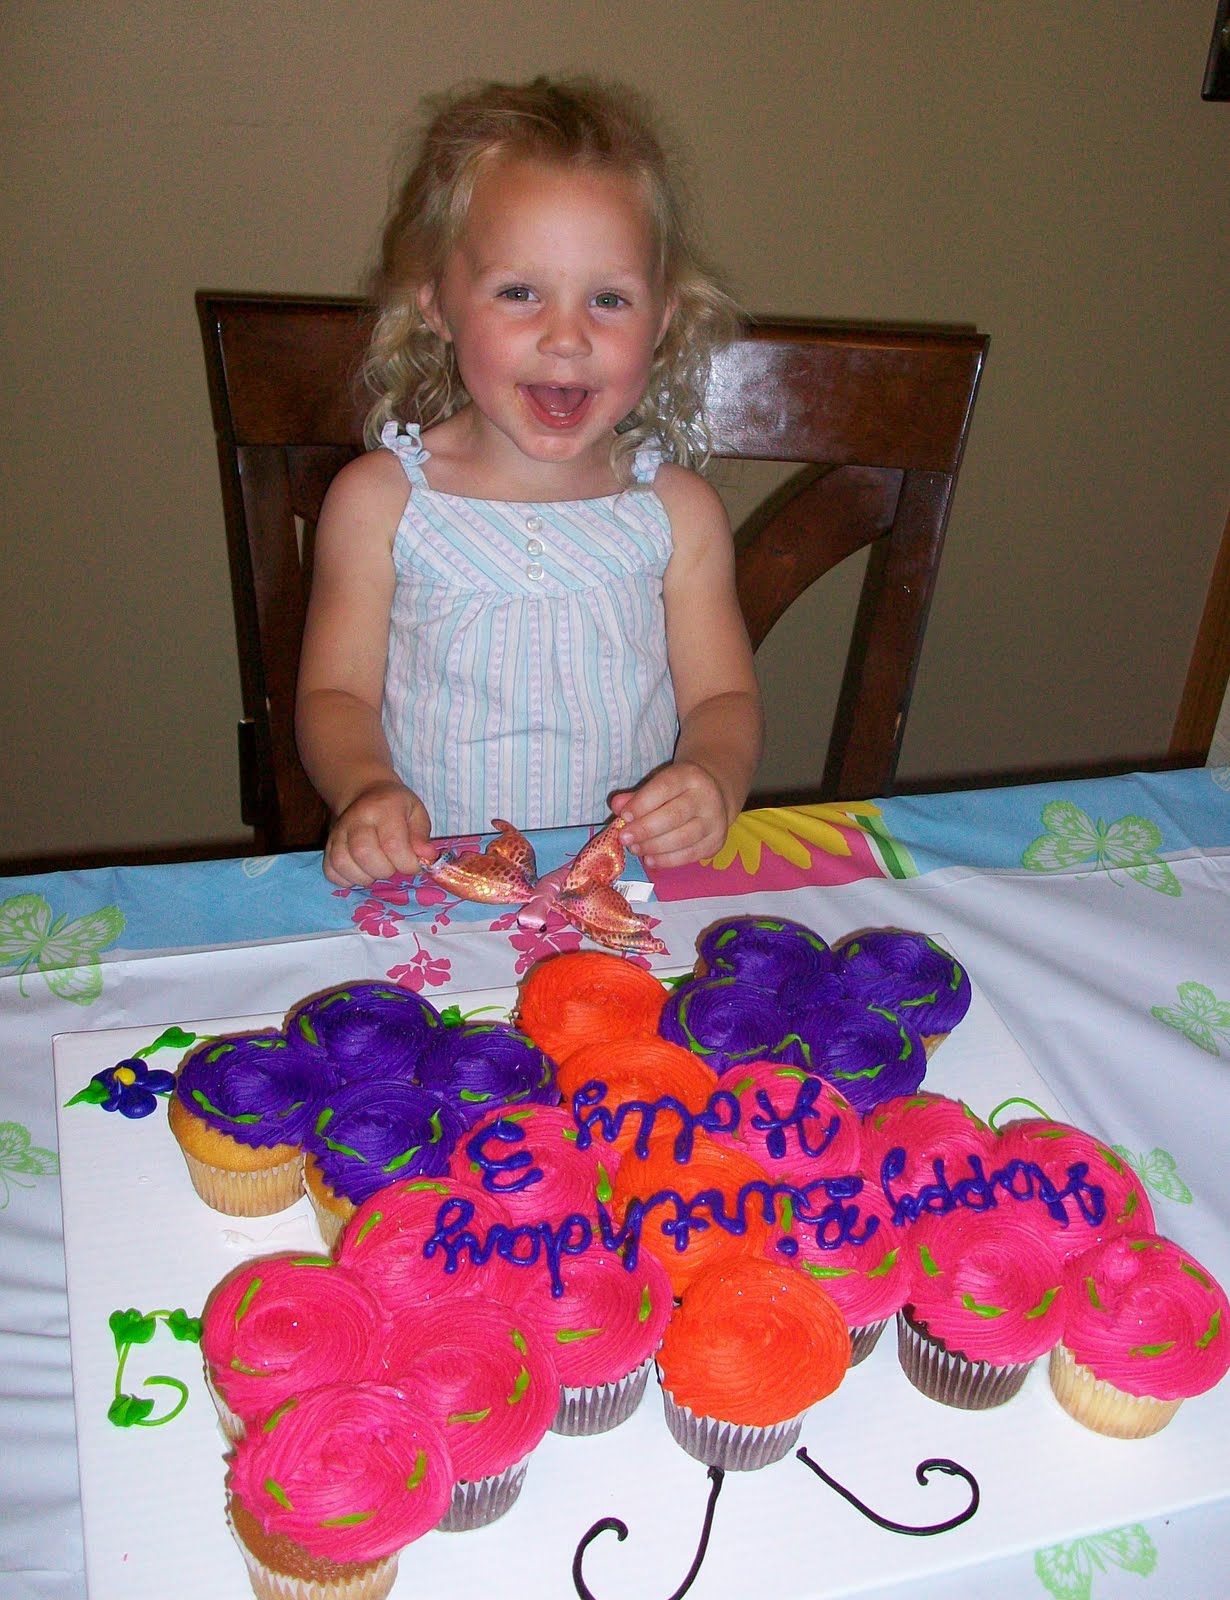 Team Johnson!: Happy Birthday Holly - 3 years old